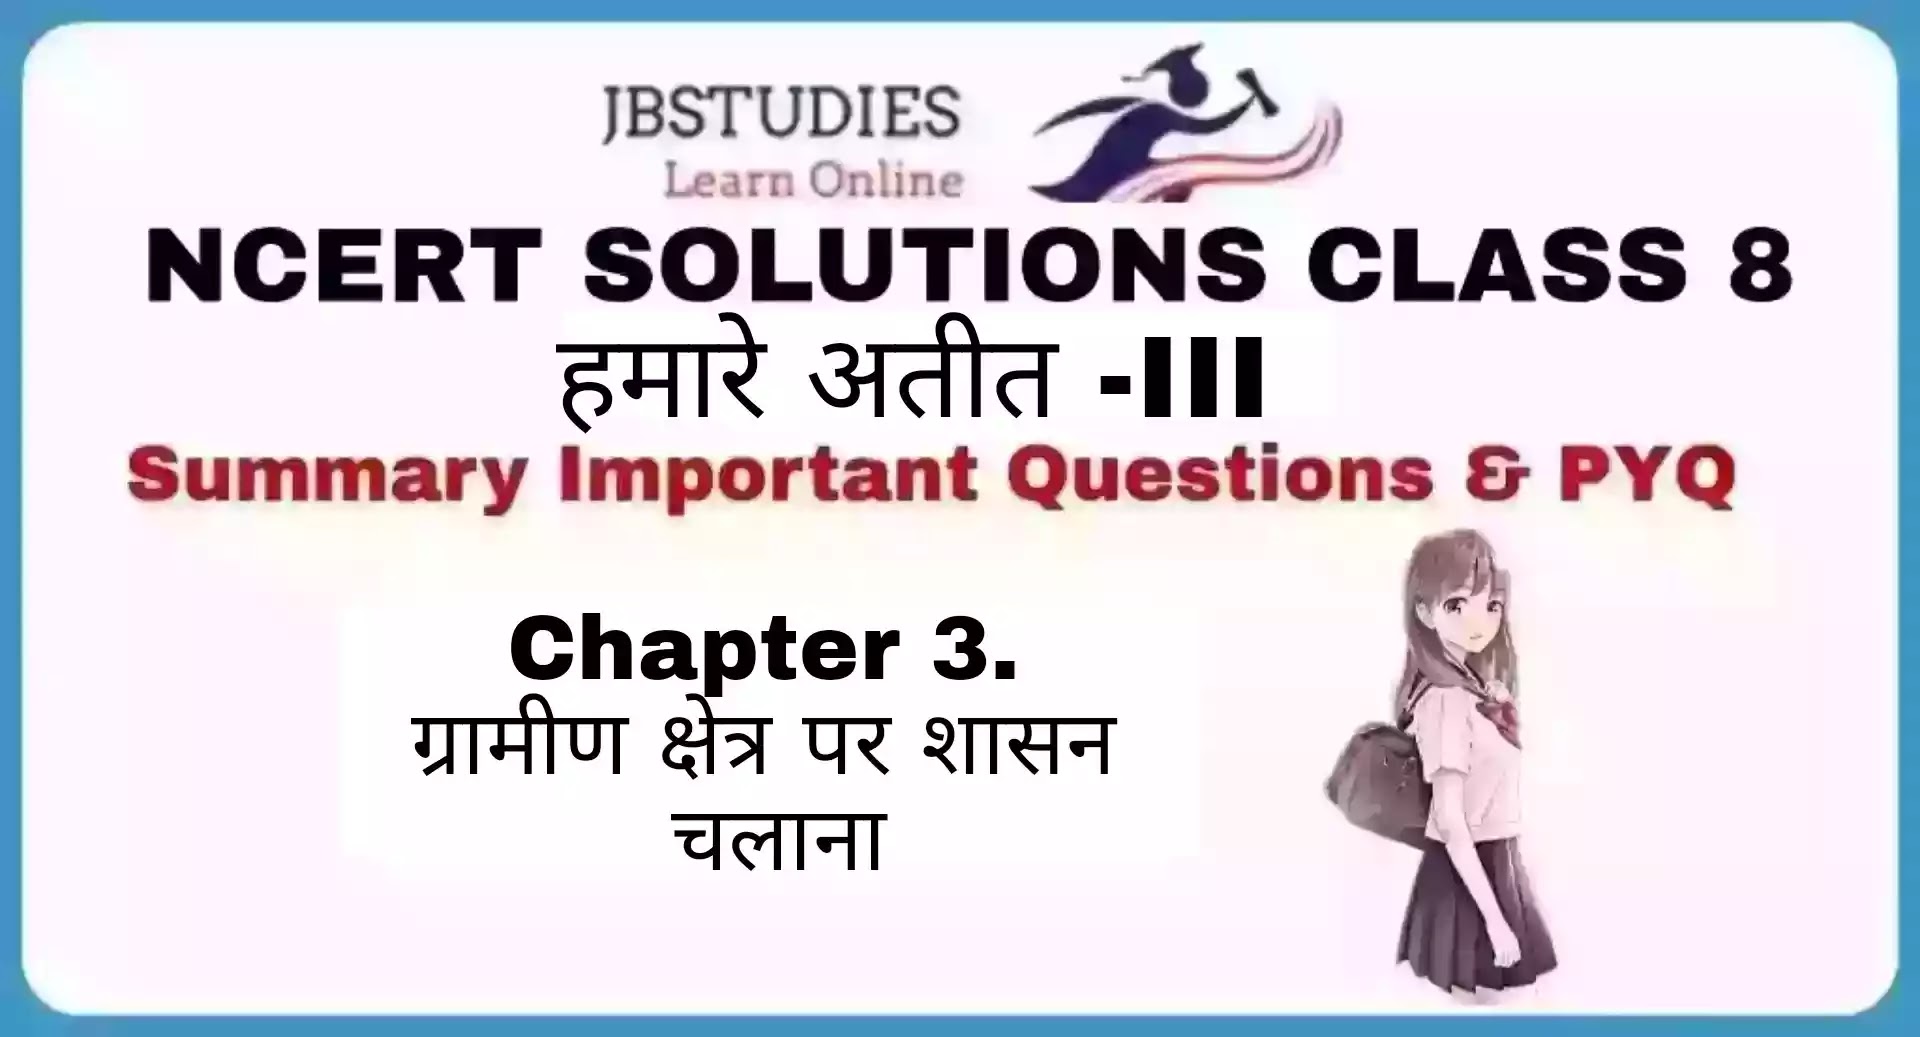 Solutions Class 8 हमारे अतीत -III Chapter- 3 (ग्रामीण क्षेत्र पर शासन चलाना)